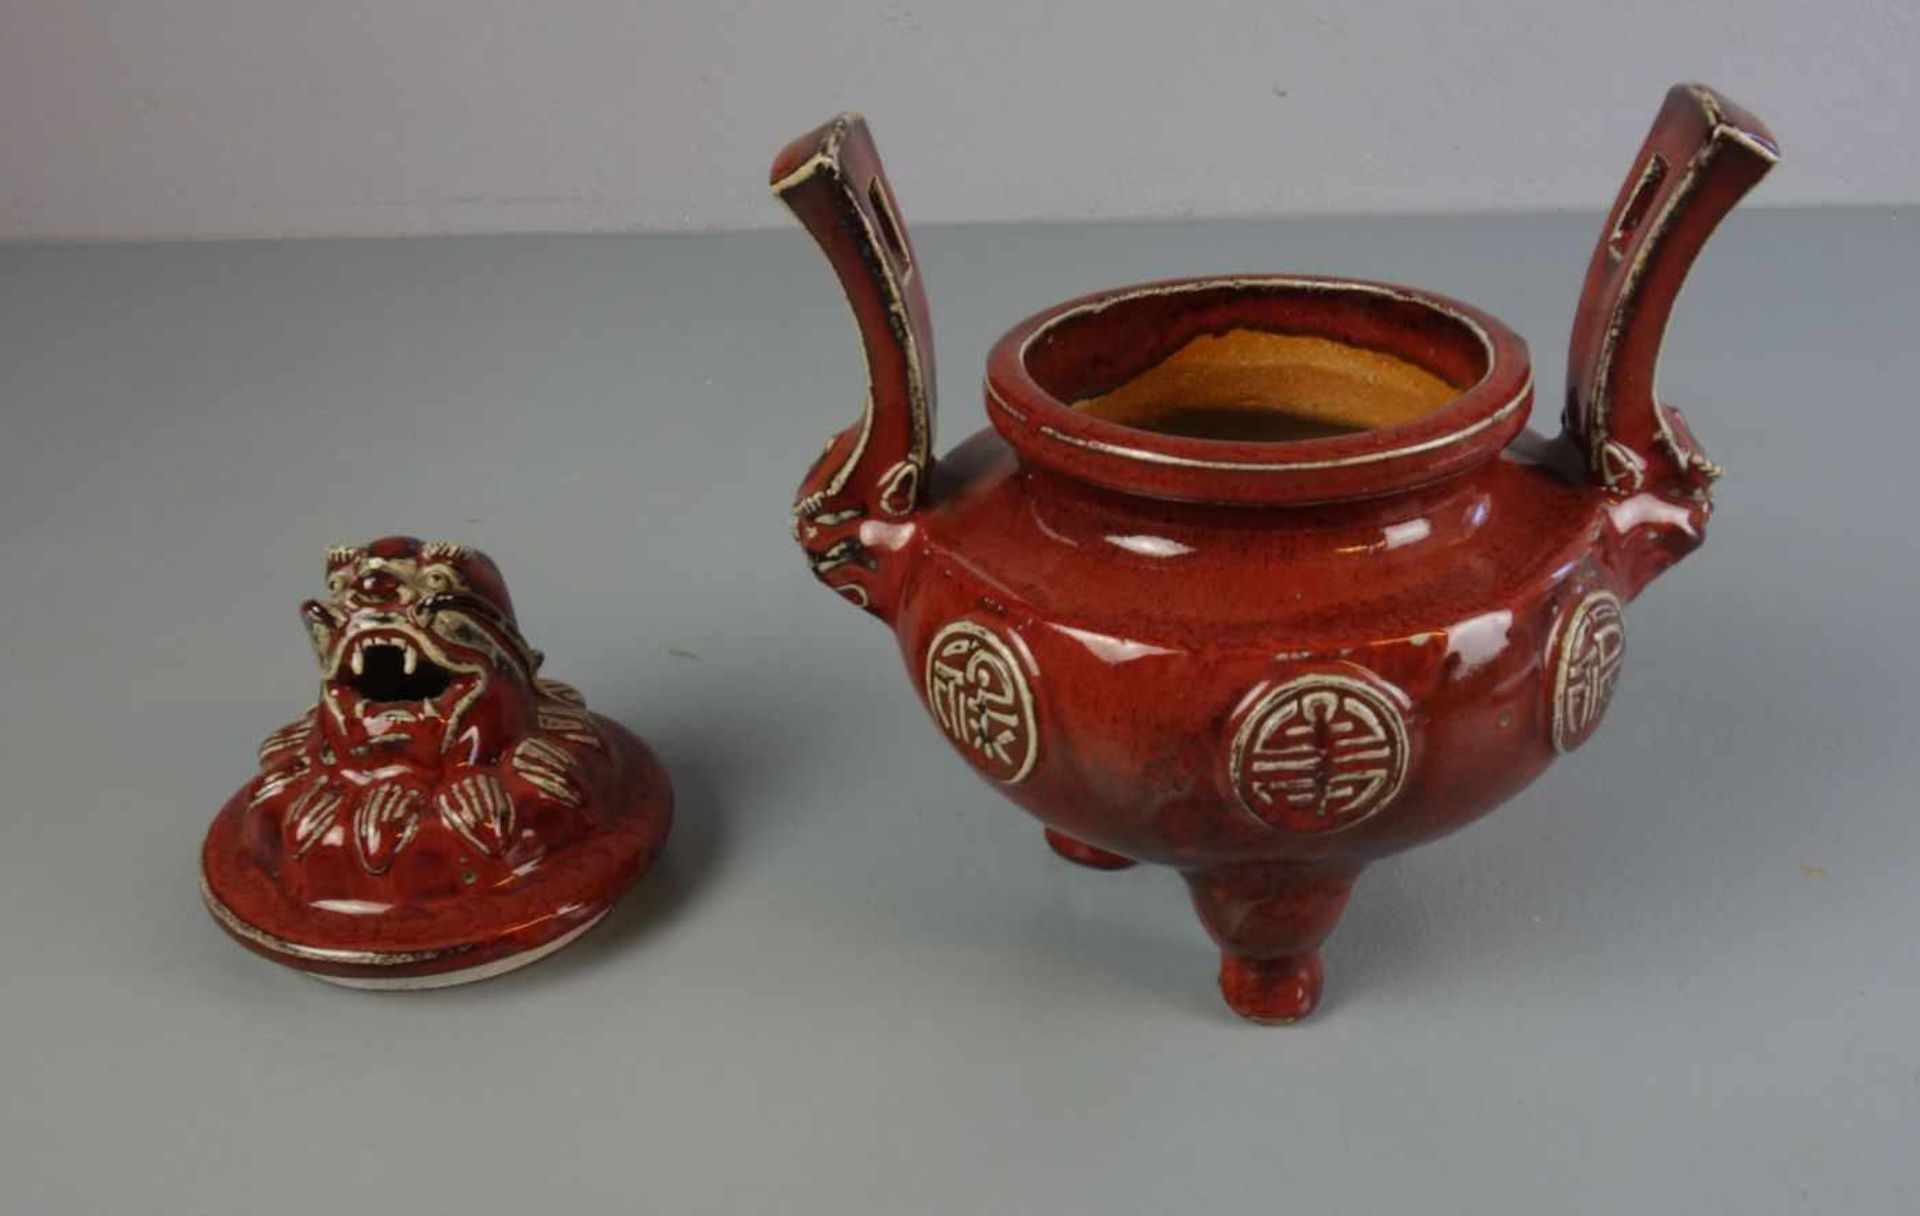 KORO / WEIHRAUCHGEFÄSS / WEIHRAUCHBRENNER, wohl China, 1. H. 20. Jh., Keramik, rote Glasur mit - Image 3 of 3